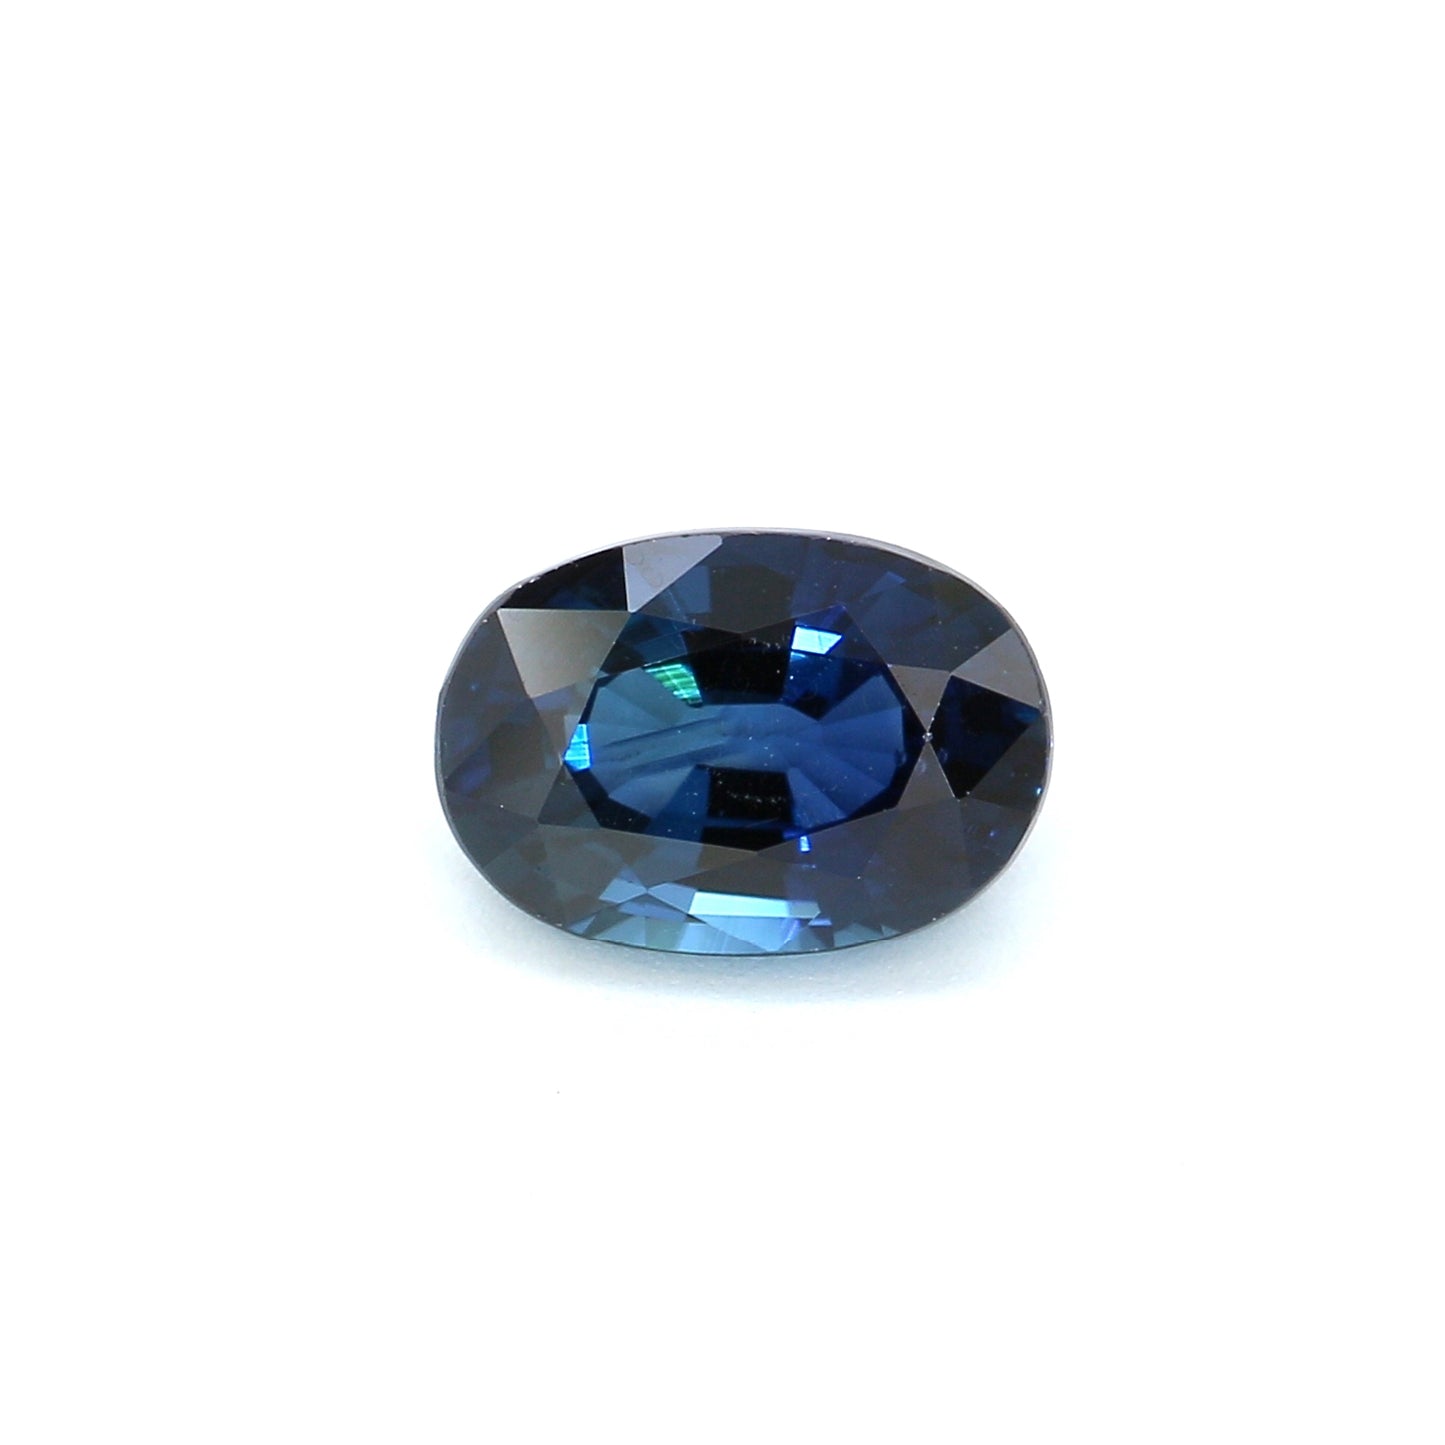 1.15ct Oval Sapphire, Heated, Basaltic - 7.03 x 4.93 x 3.55mm